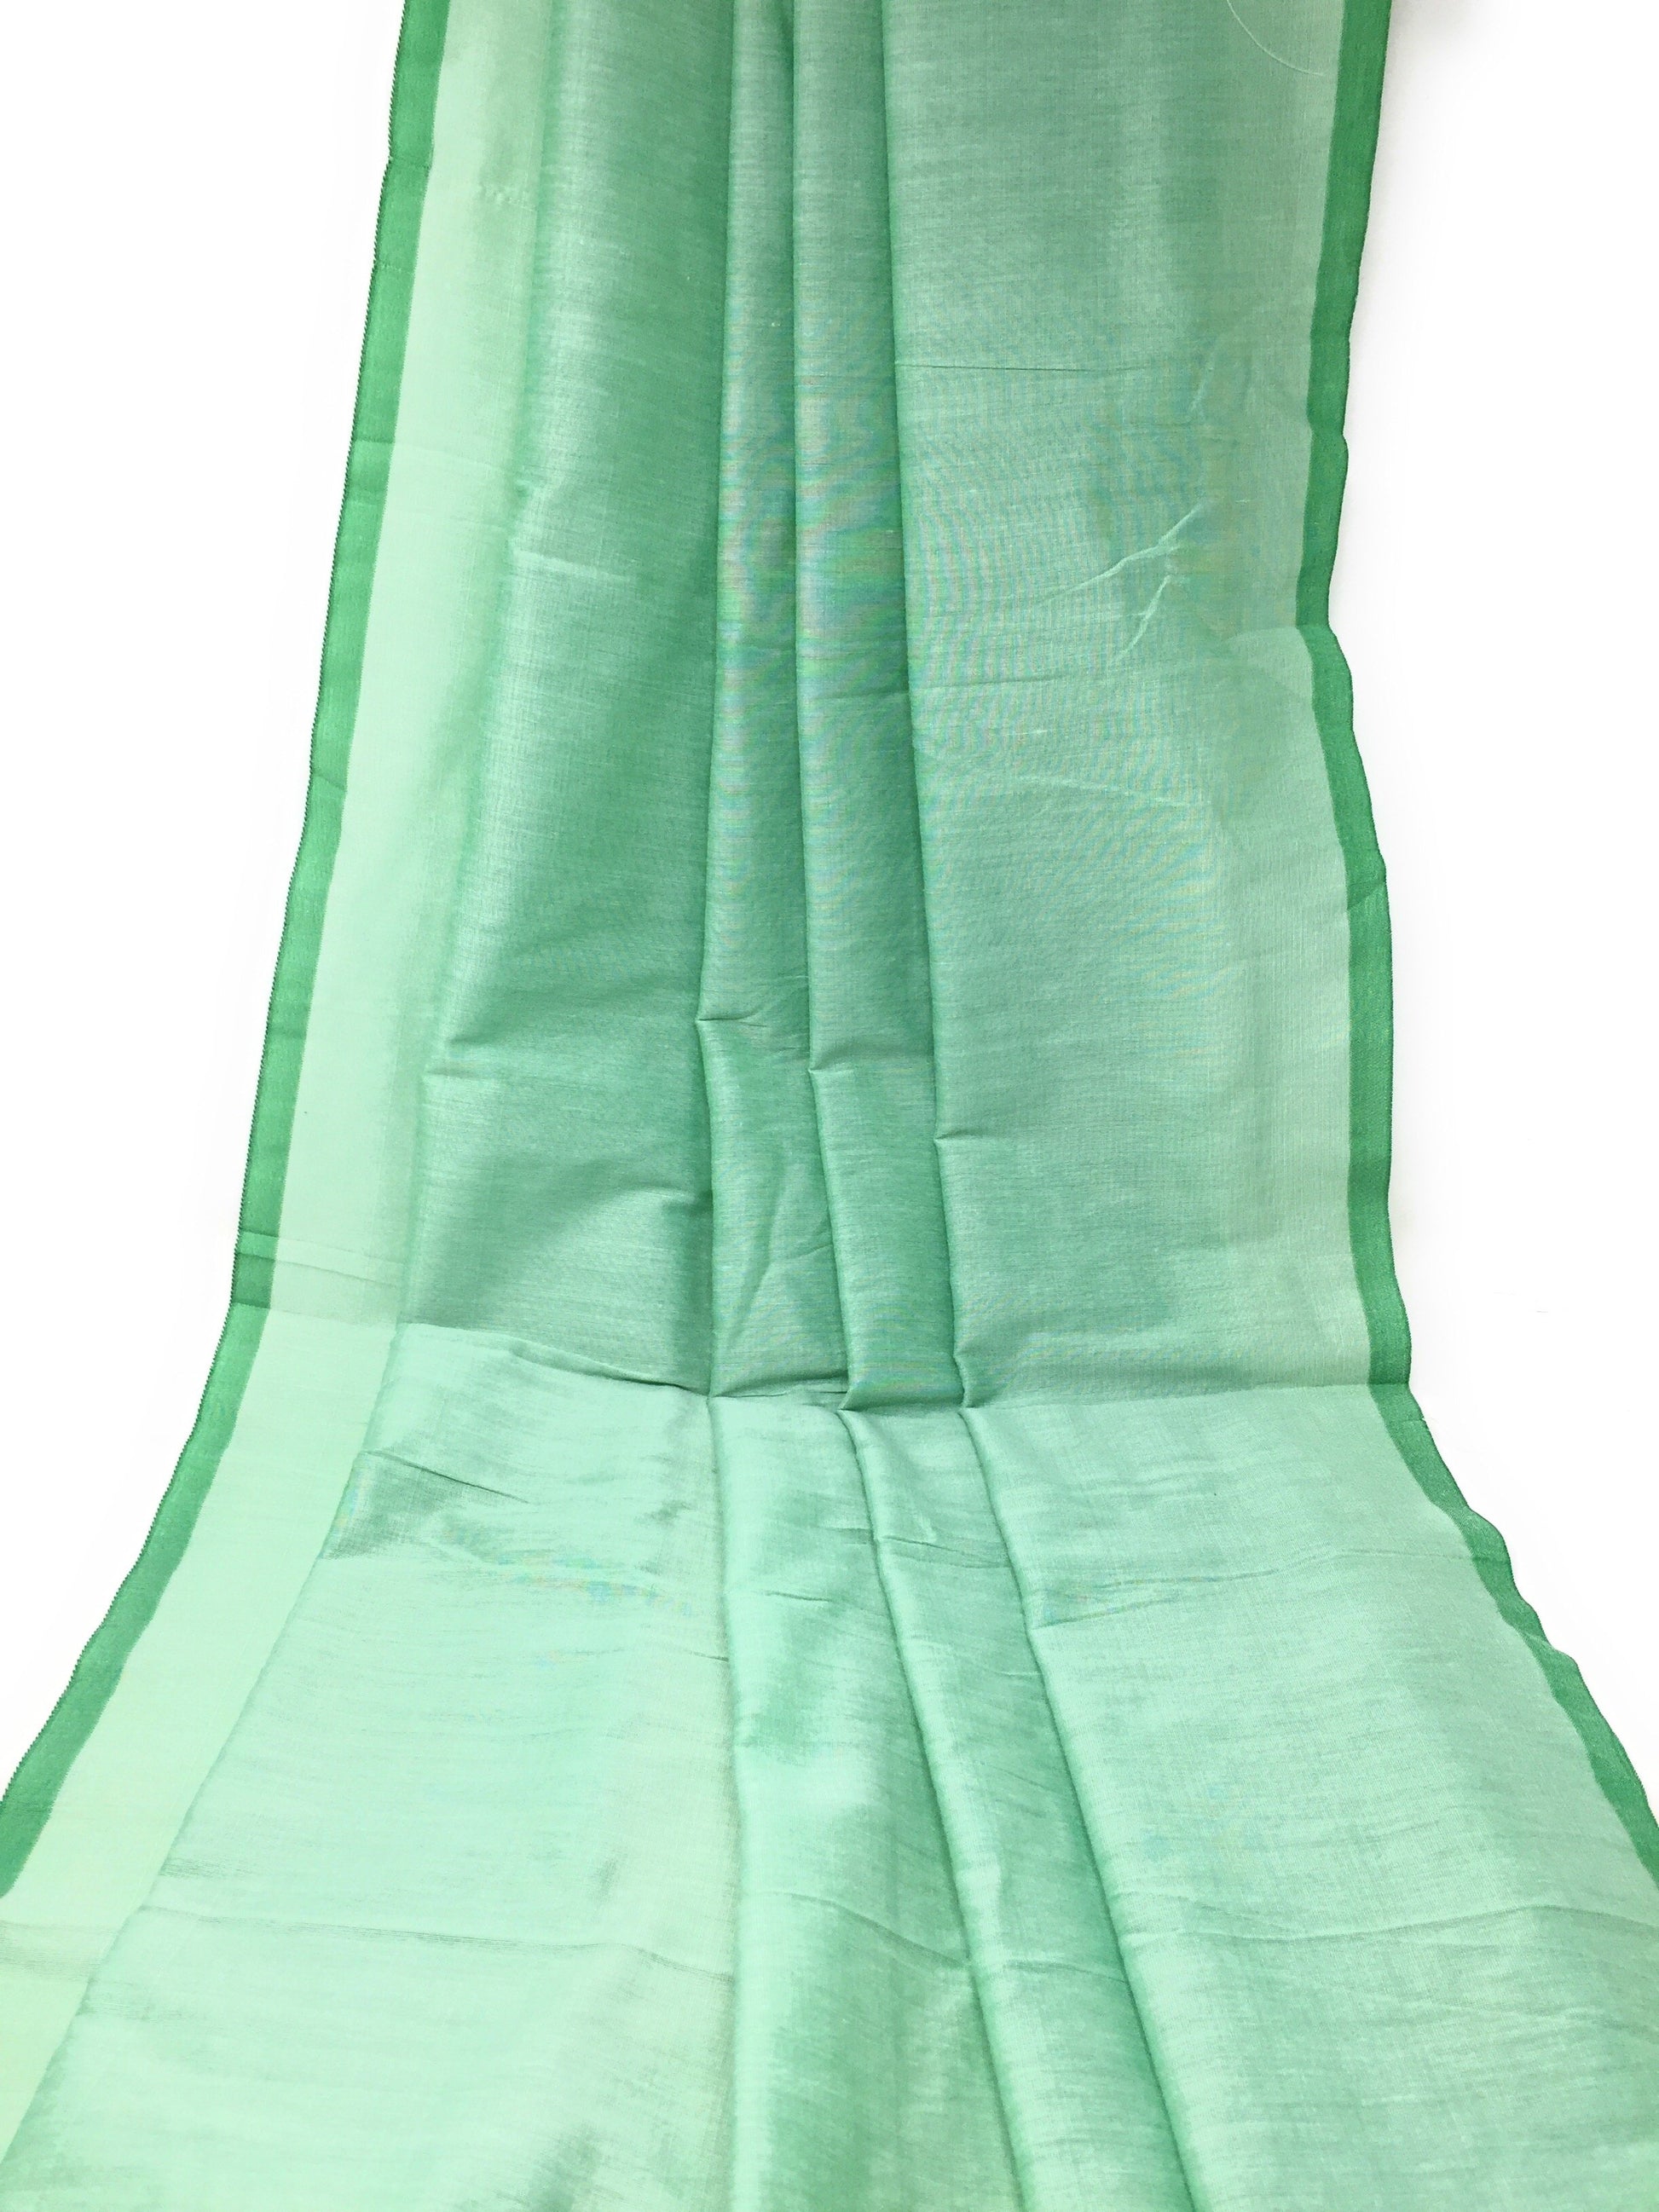 Sea Green Cotton Silk Dress Material